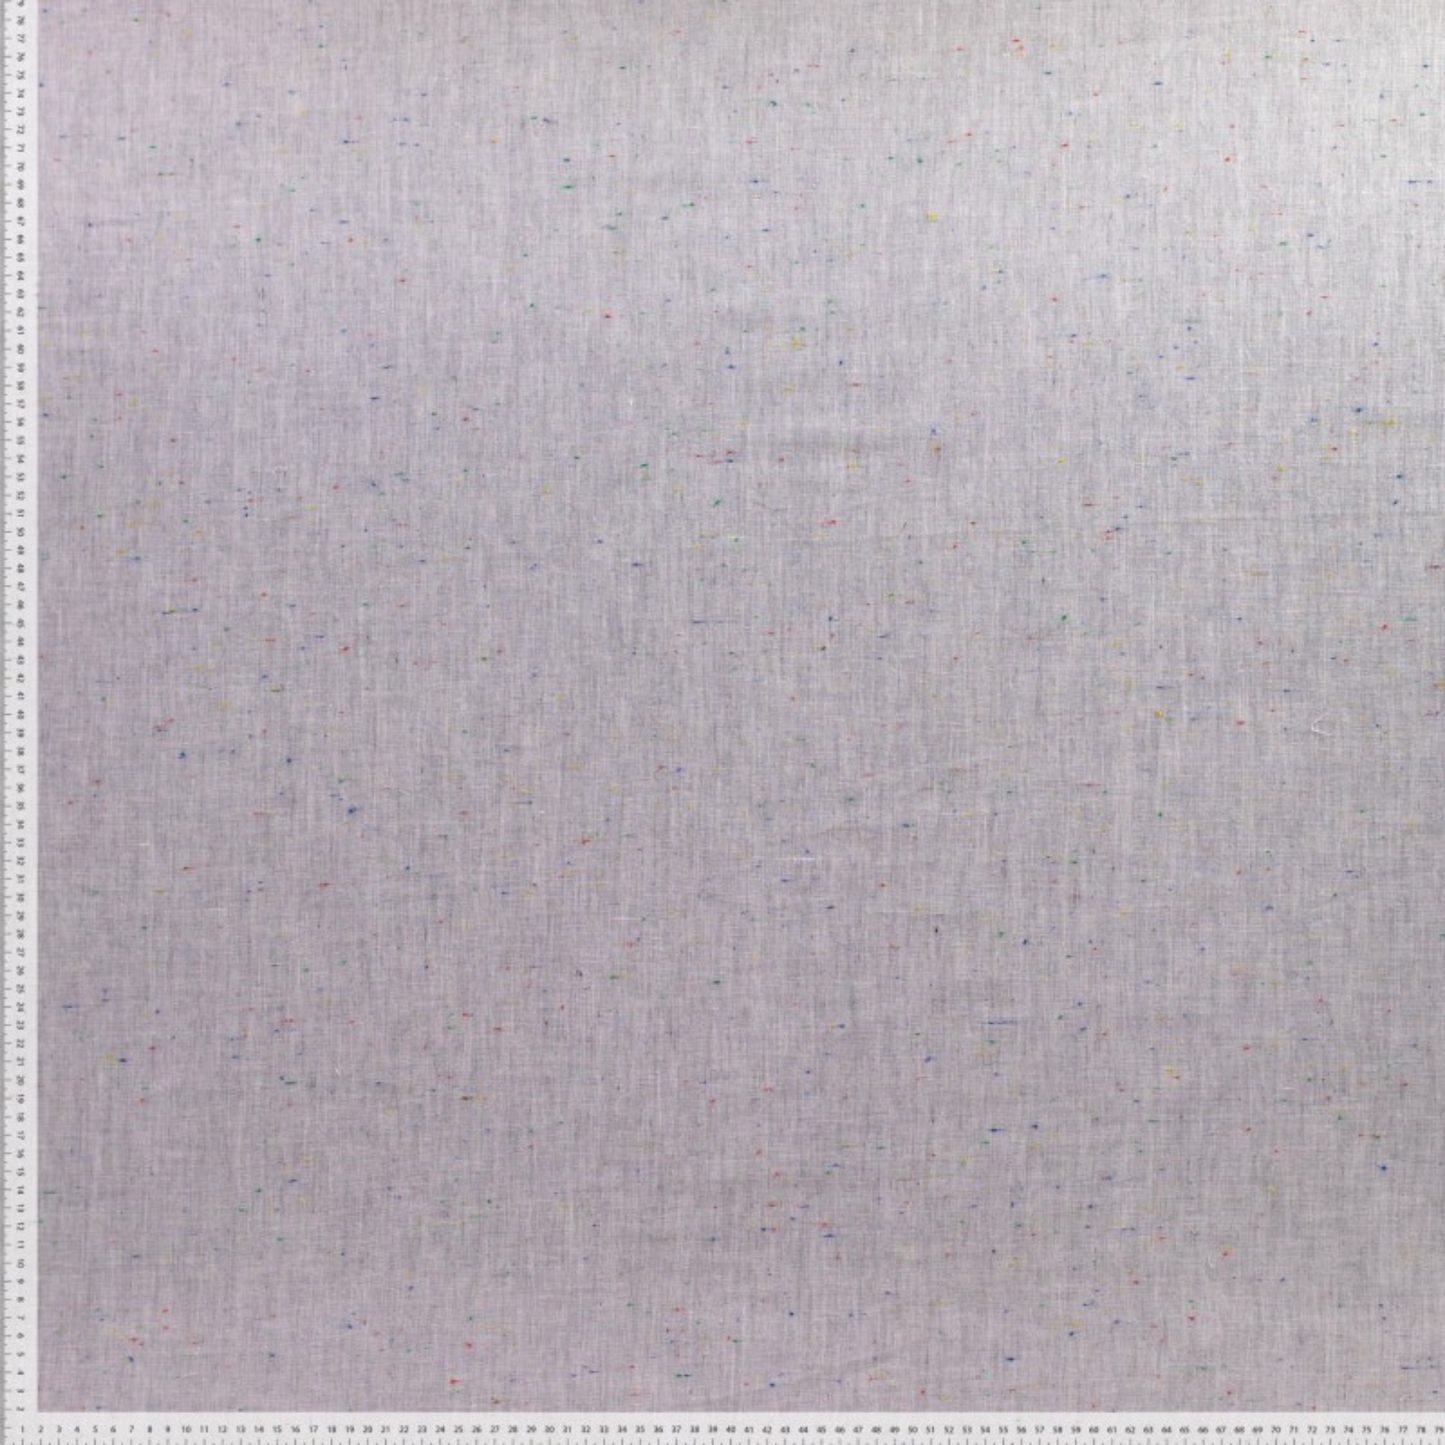 Cotton Voile Melange in Light Grey